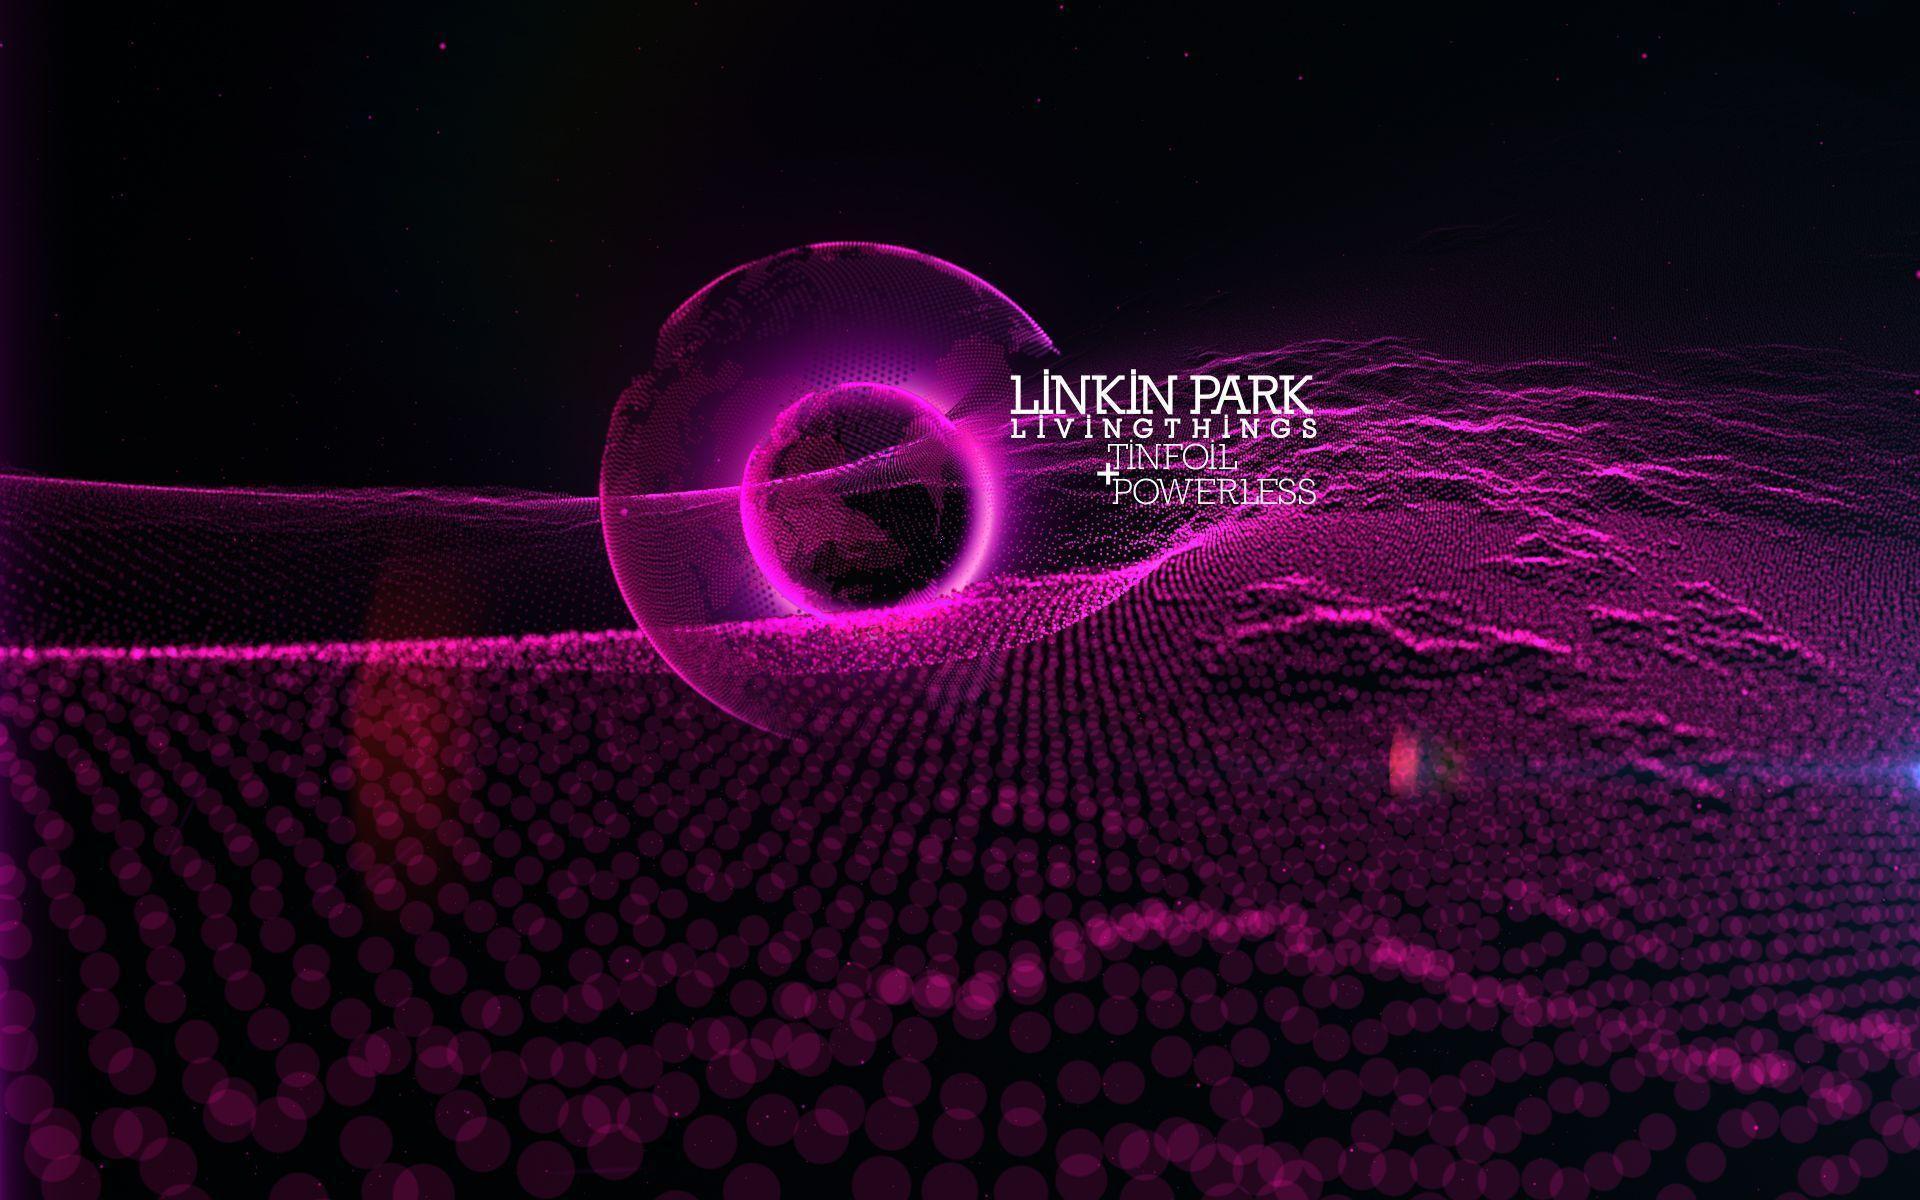 LIVING THINGS Song Art Linkin Park Park Live